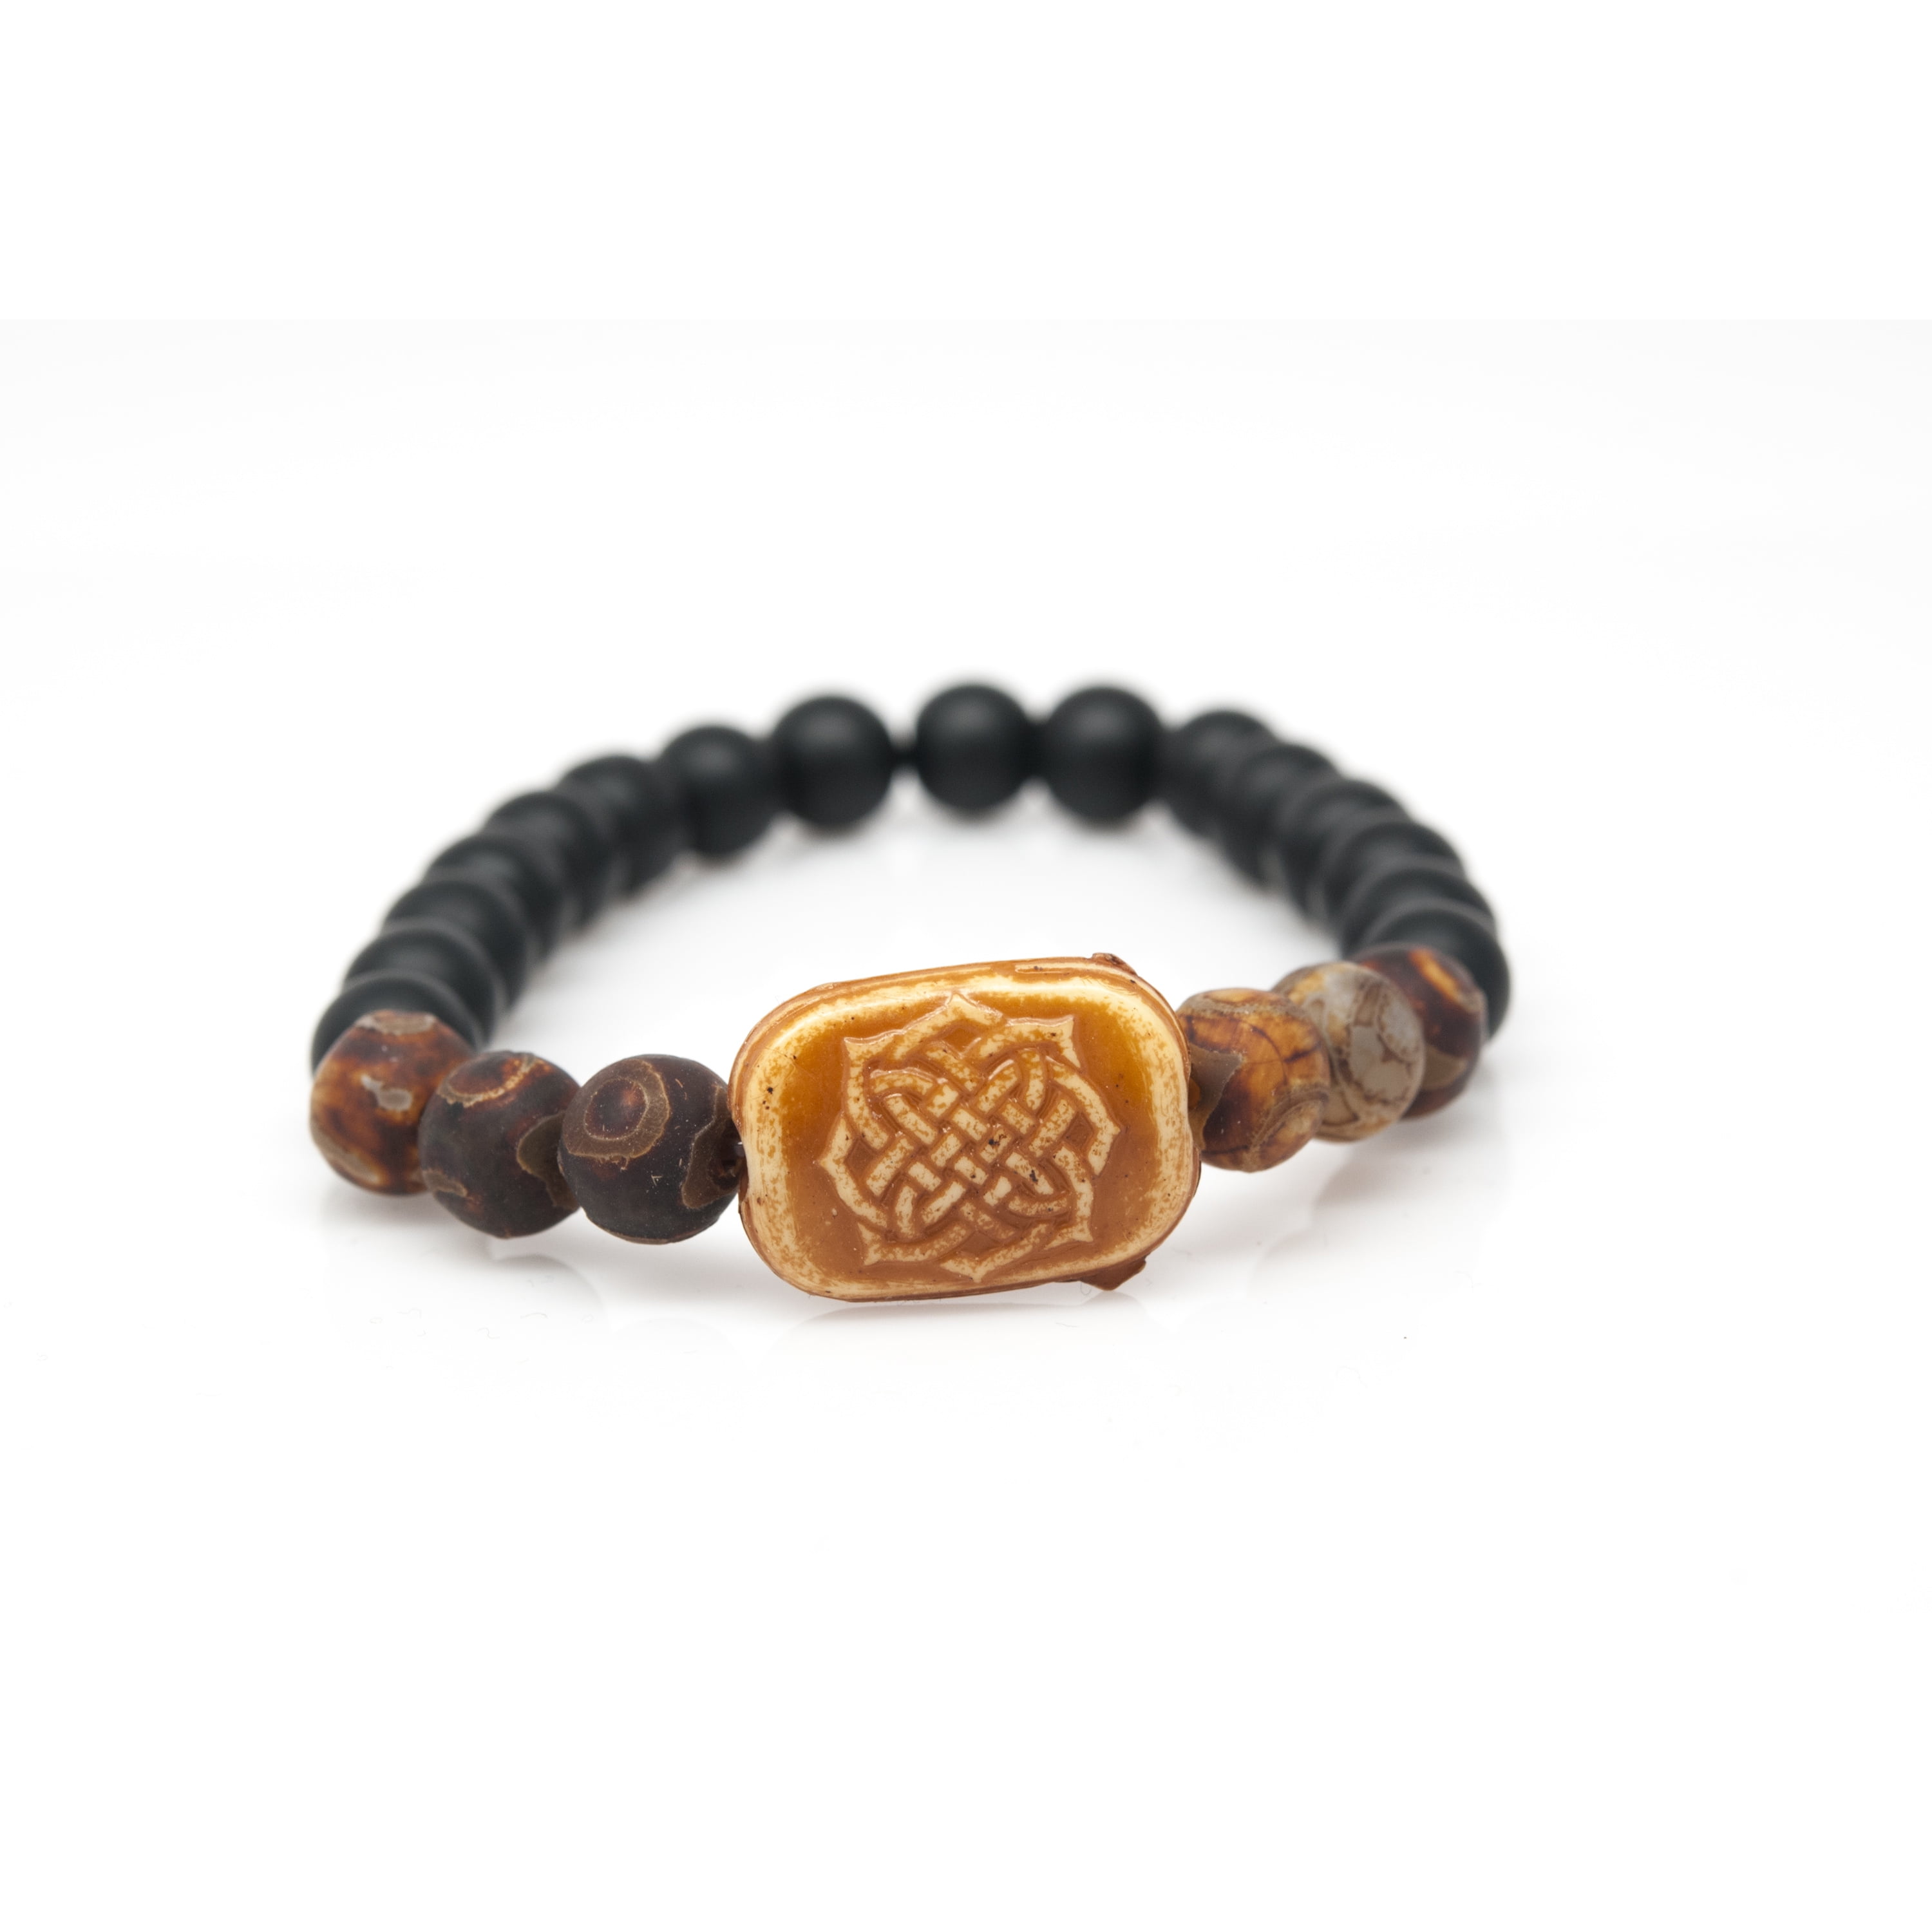 Wrist Beads Semiprecious Stone Bracelet - Real Black Onyx and Agate ...